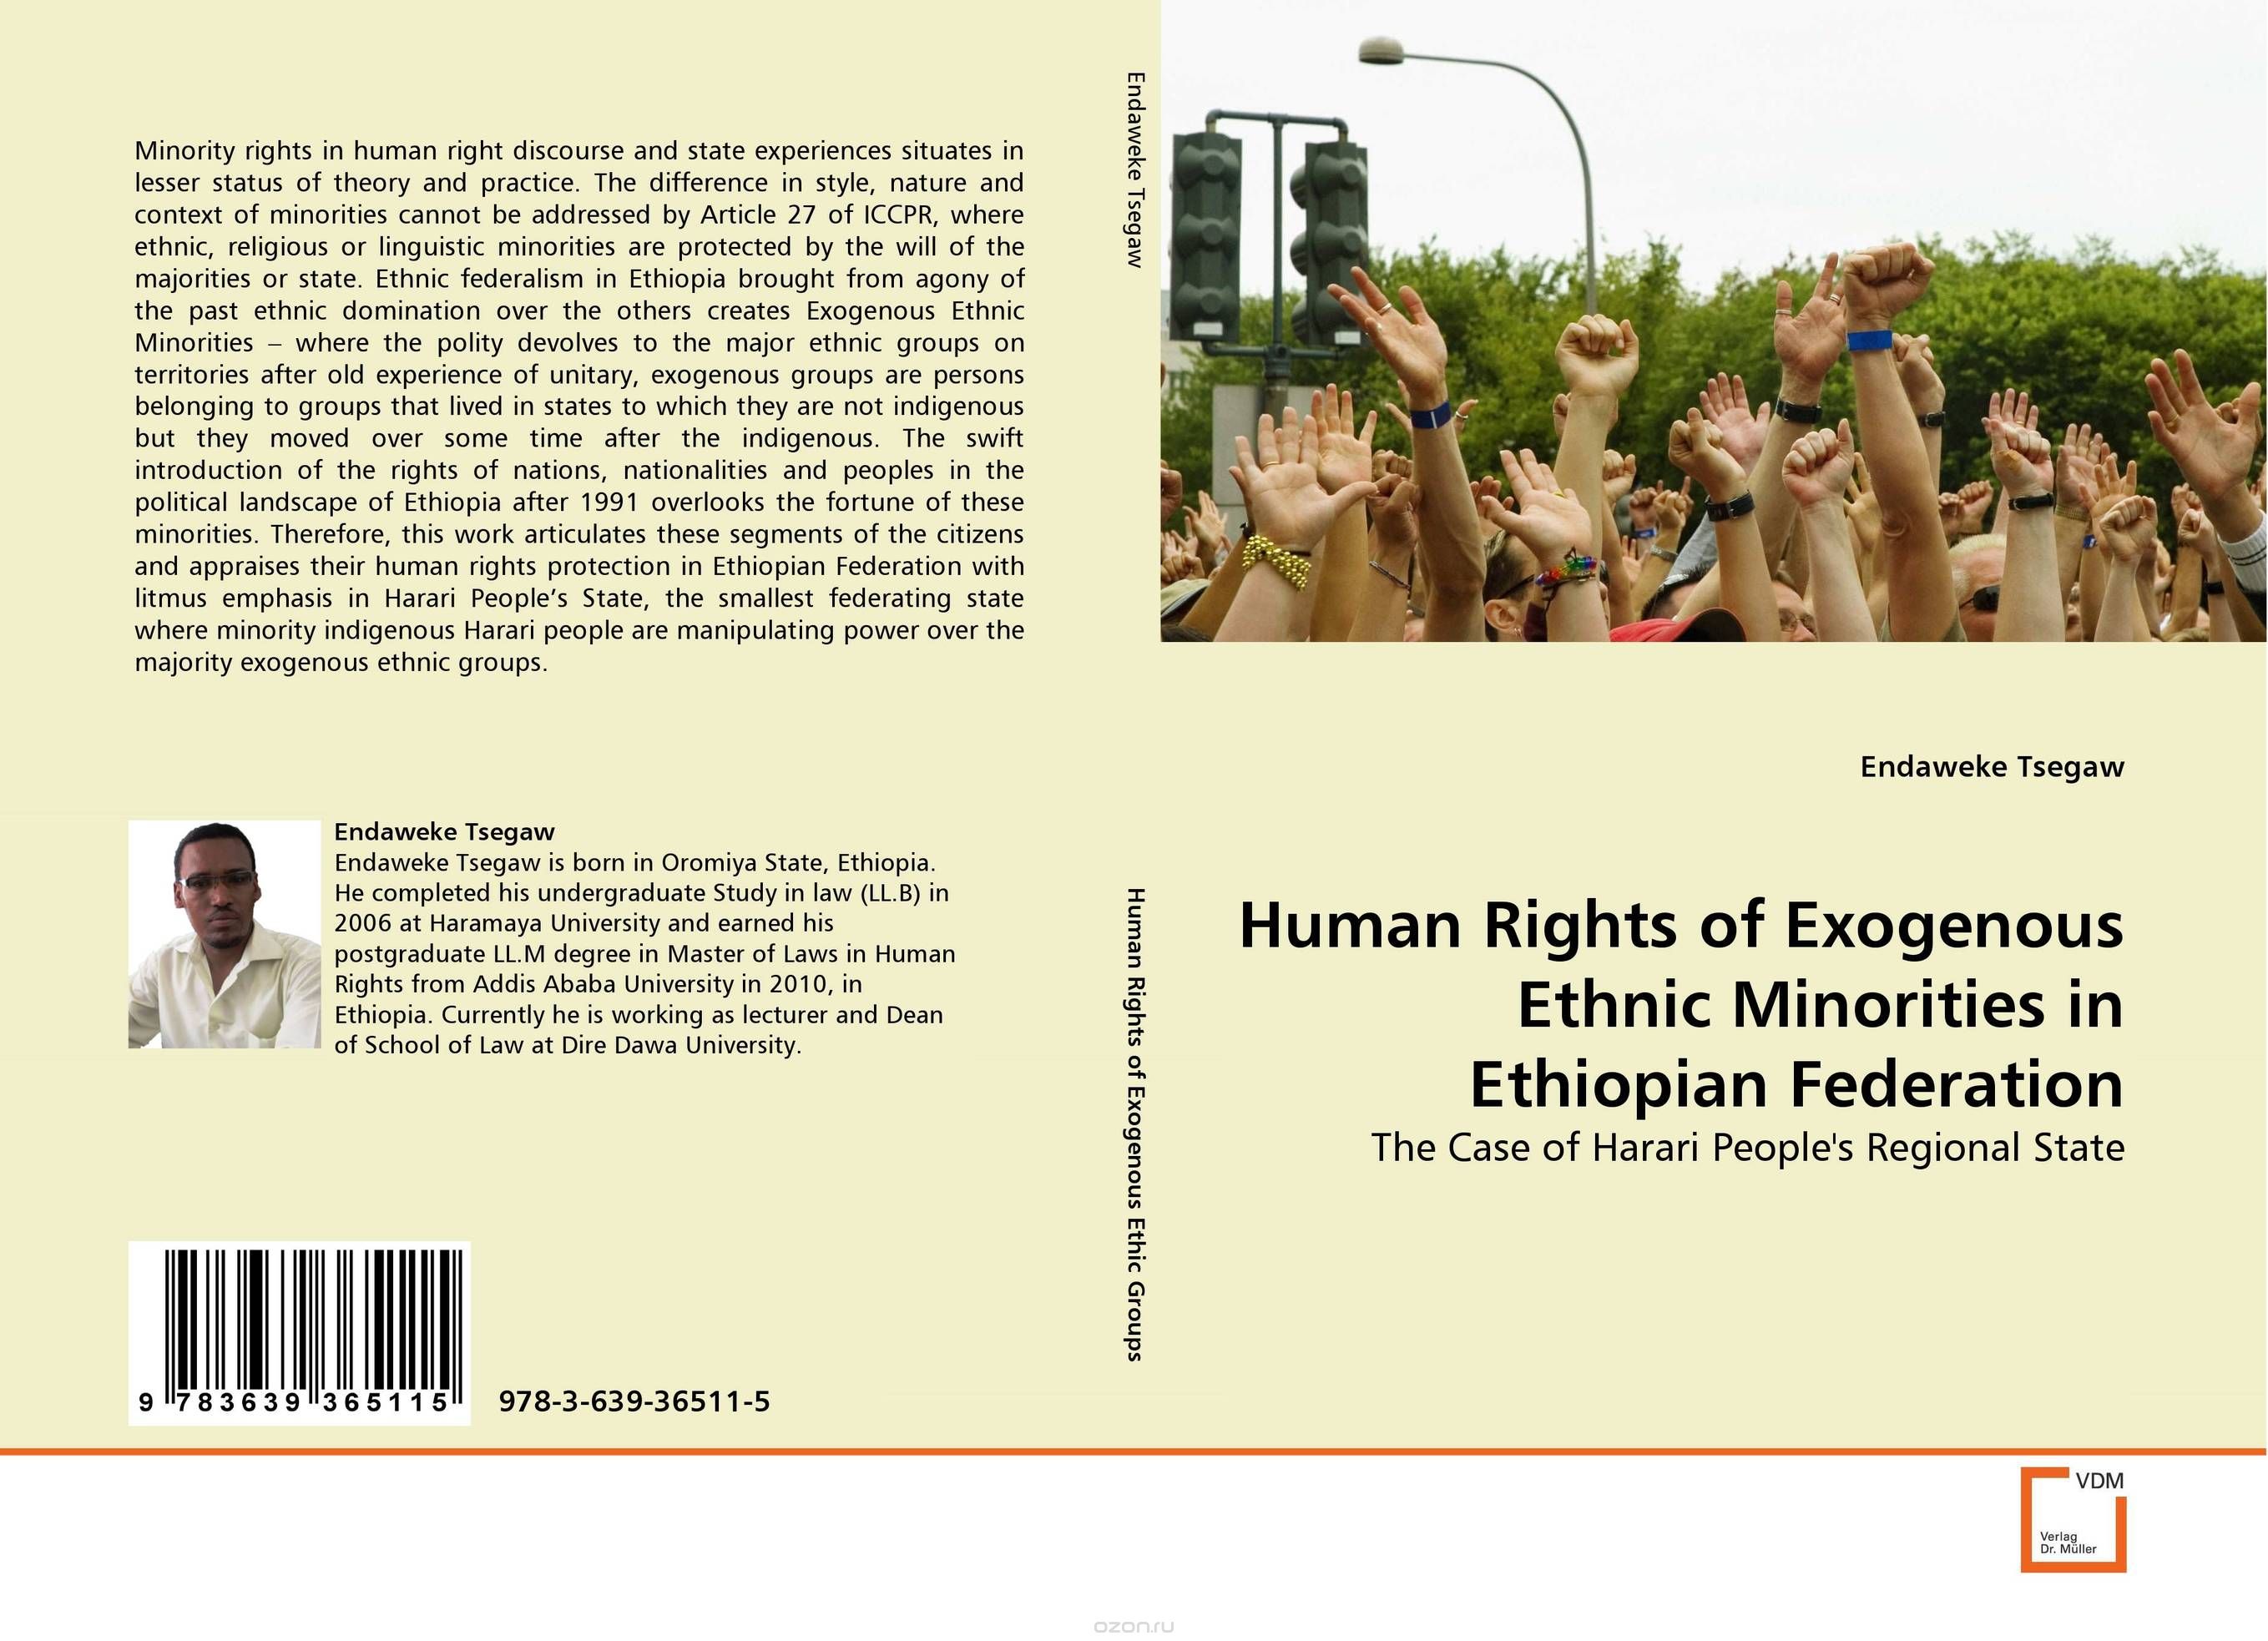 Скачать книгу "Human Rights of Exogenous Ethnic Minorities in Ethiopian Federation"